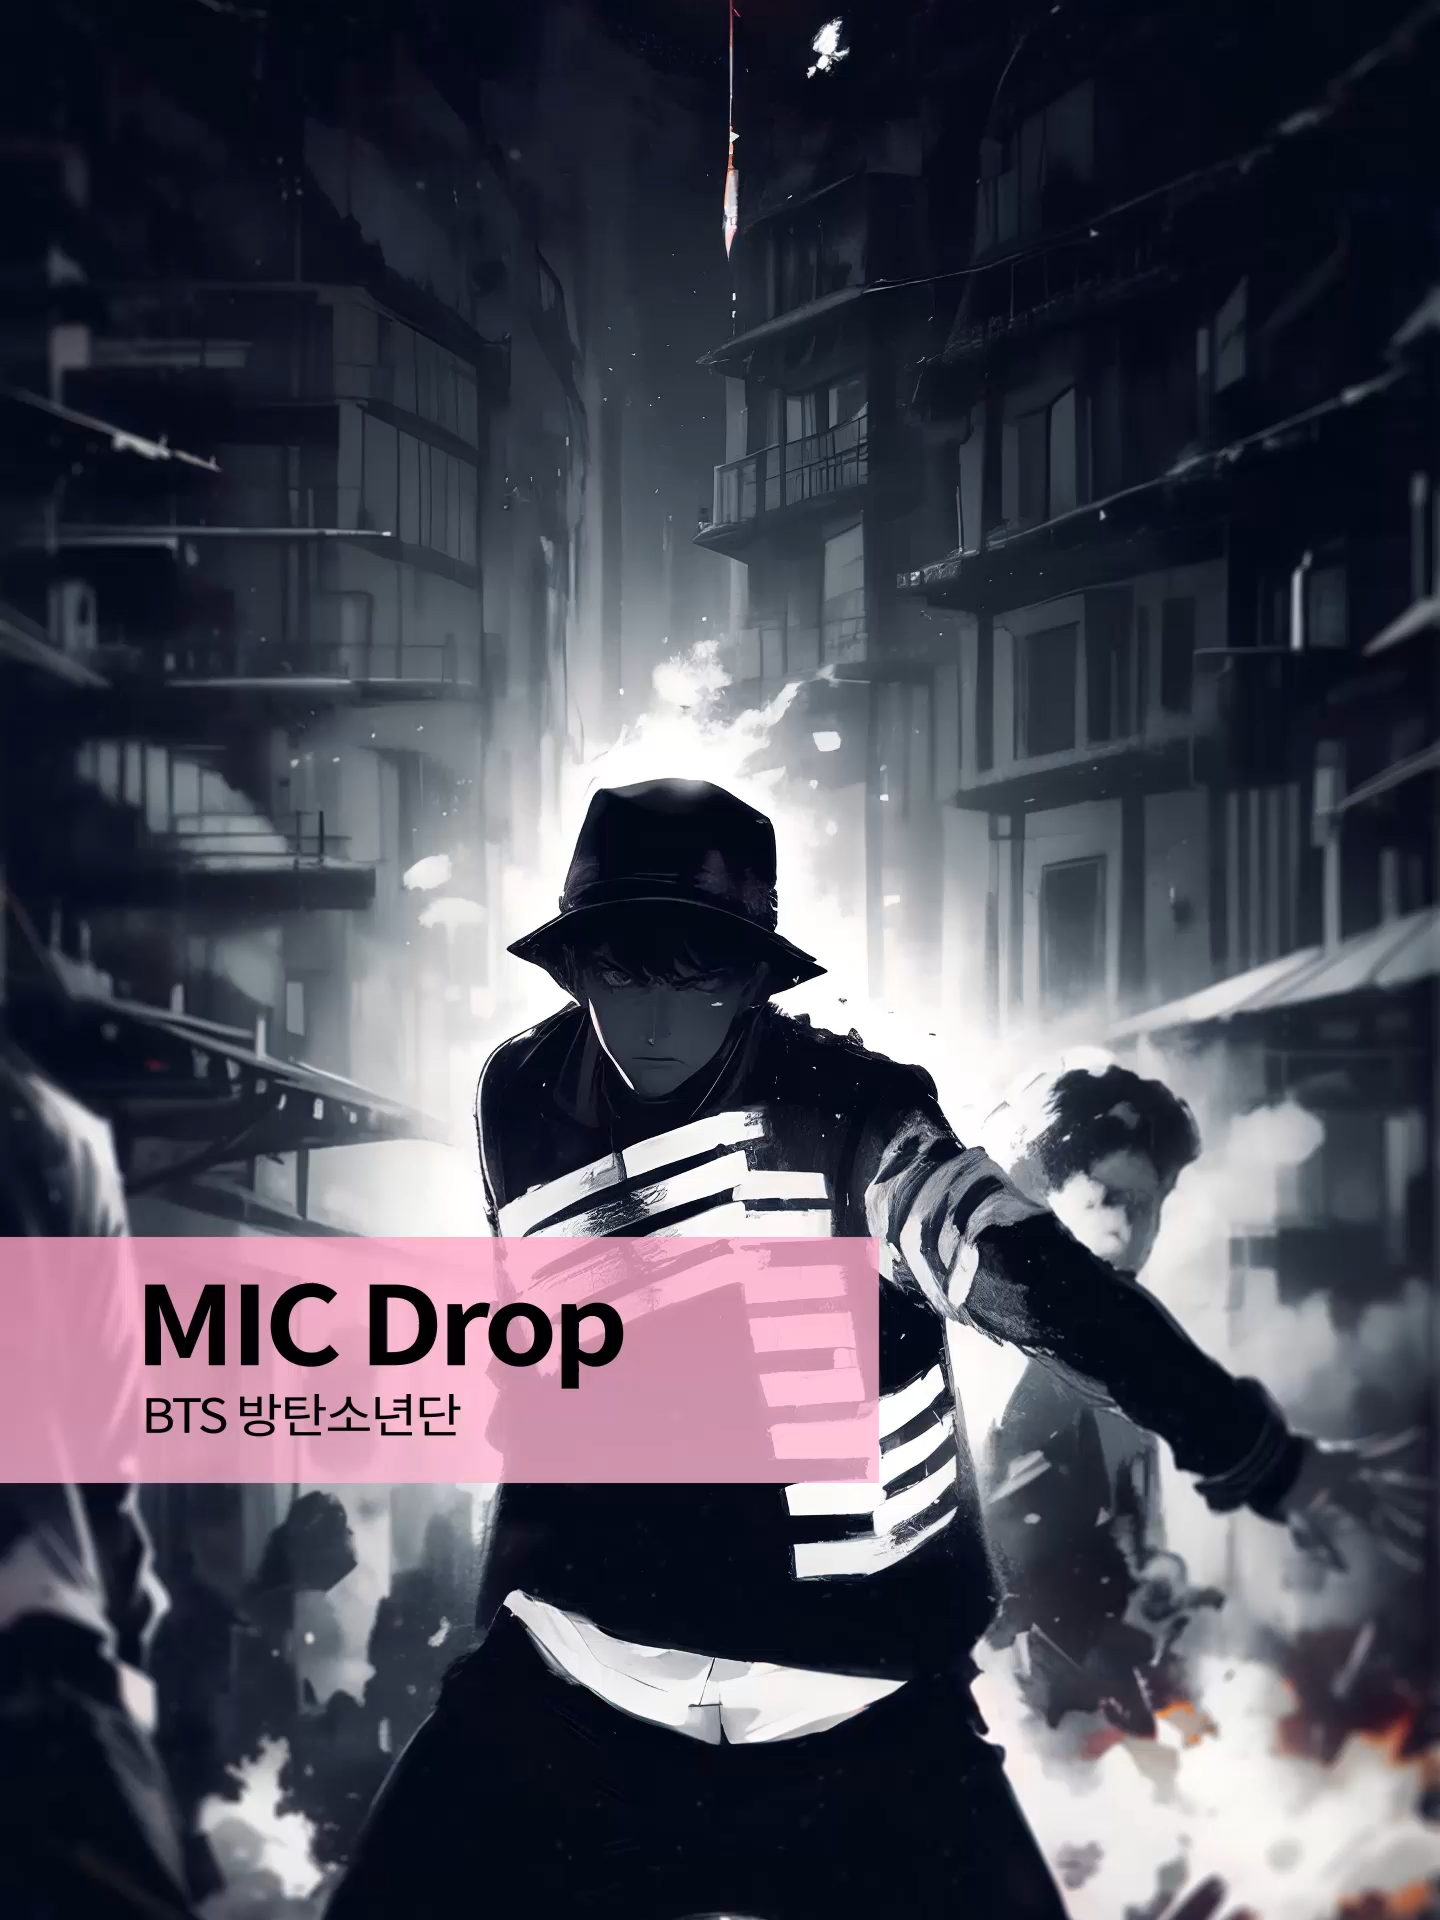 BTS (방탄소년단) 'MIC Drop' AI animation #kpop  BTS kpop #bts #micdrop #micdrop_bts #bts_micdrop #방탄 #마이크드롭 #btsclip #bangtan #FYP #pinksoy #핑크소이 #AI #anime #tiktokdance @bts_official_bighit